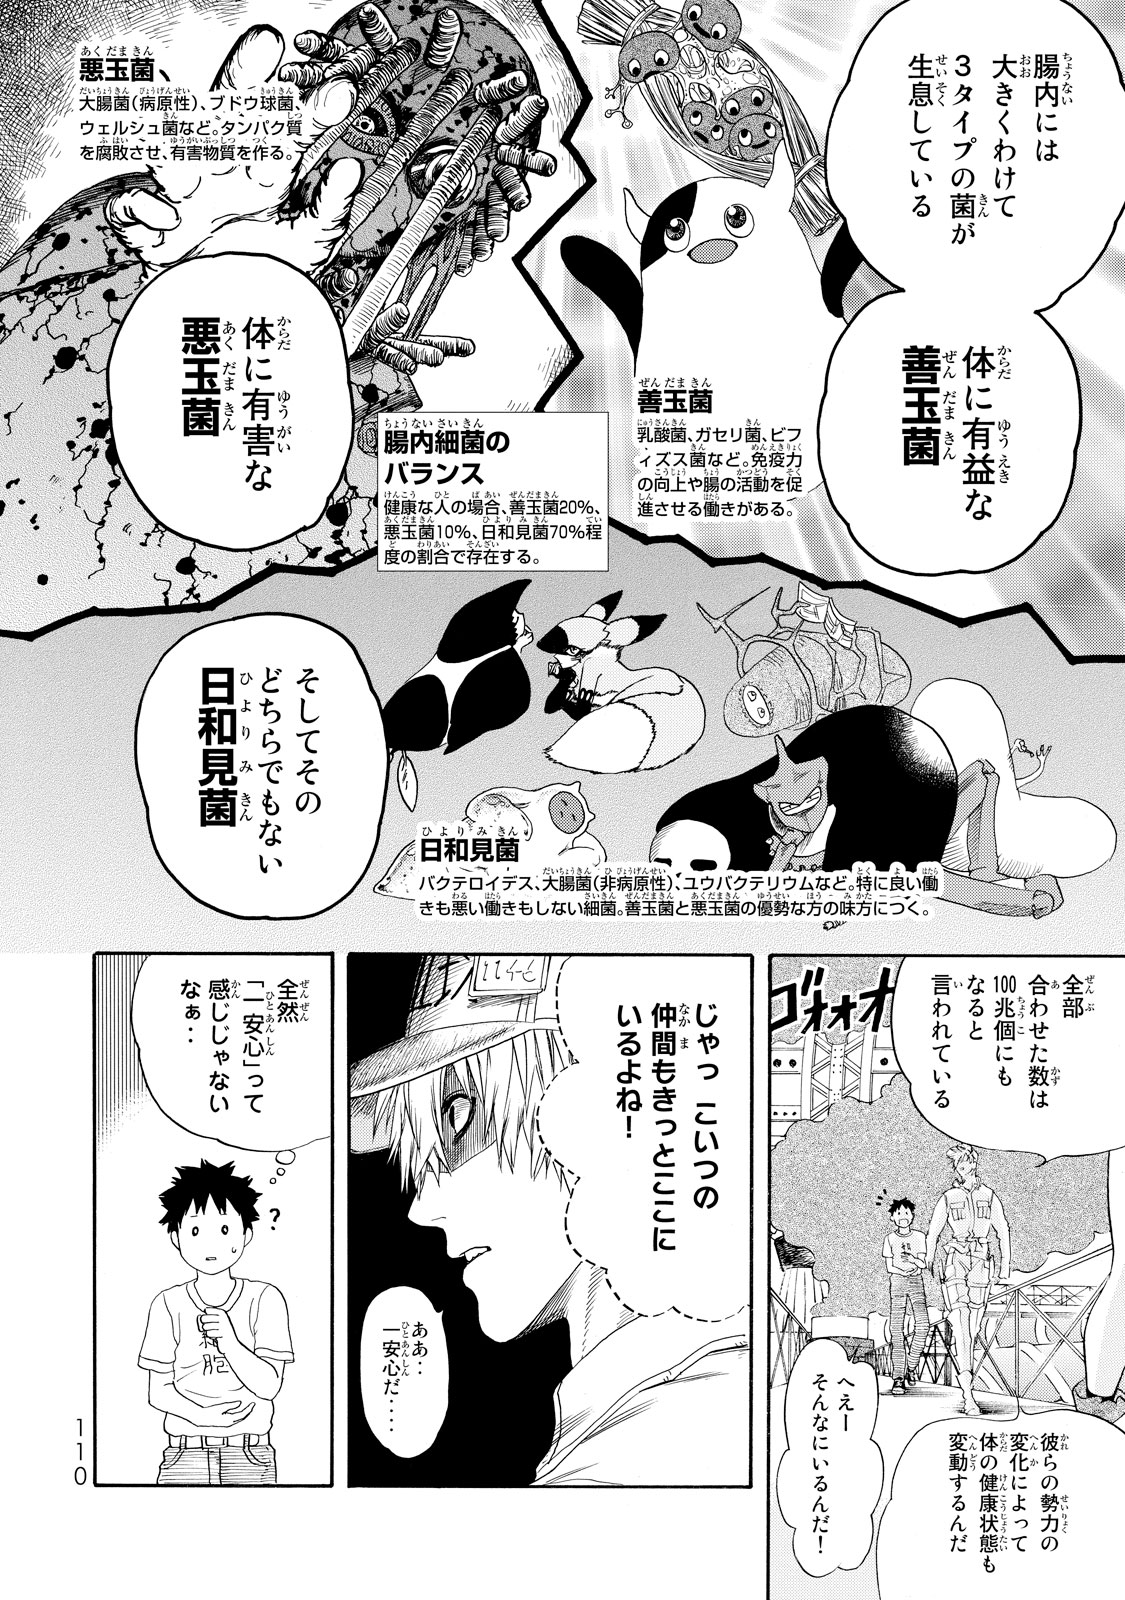 Hataraku Saibou - Chapter 23 - Page 4